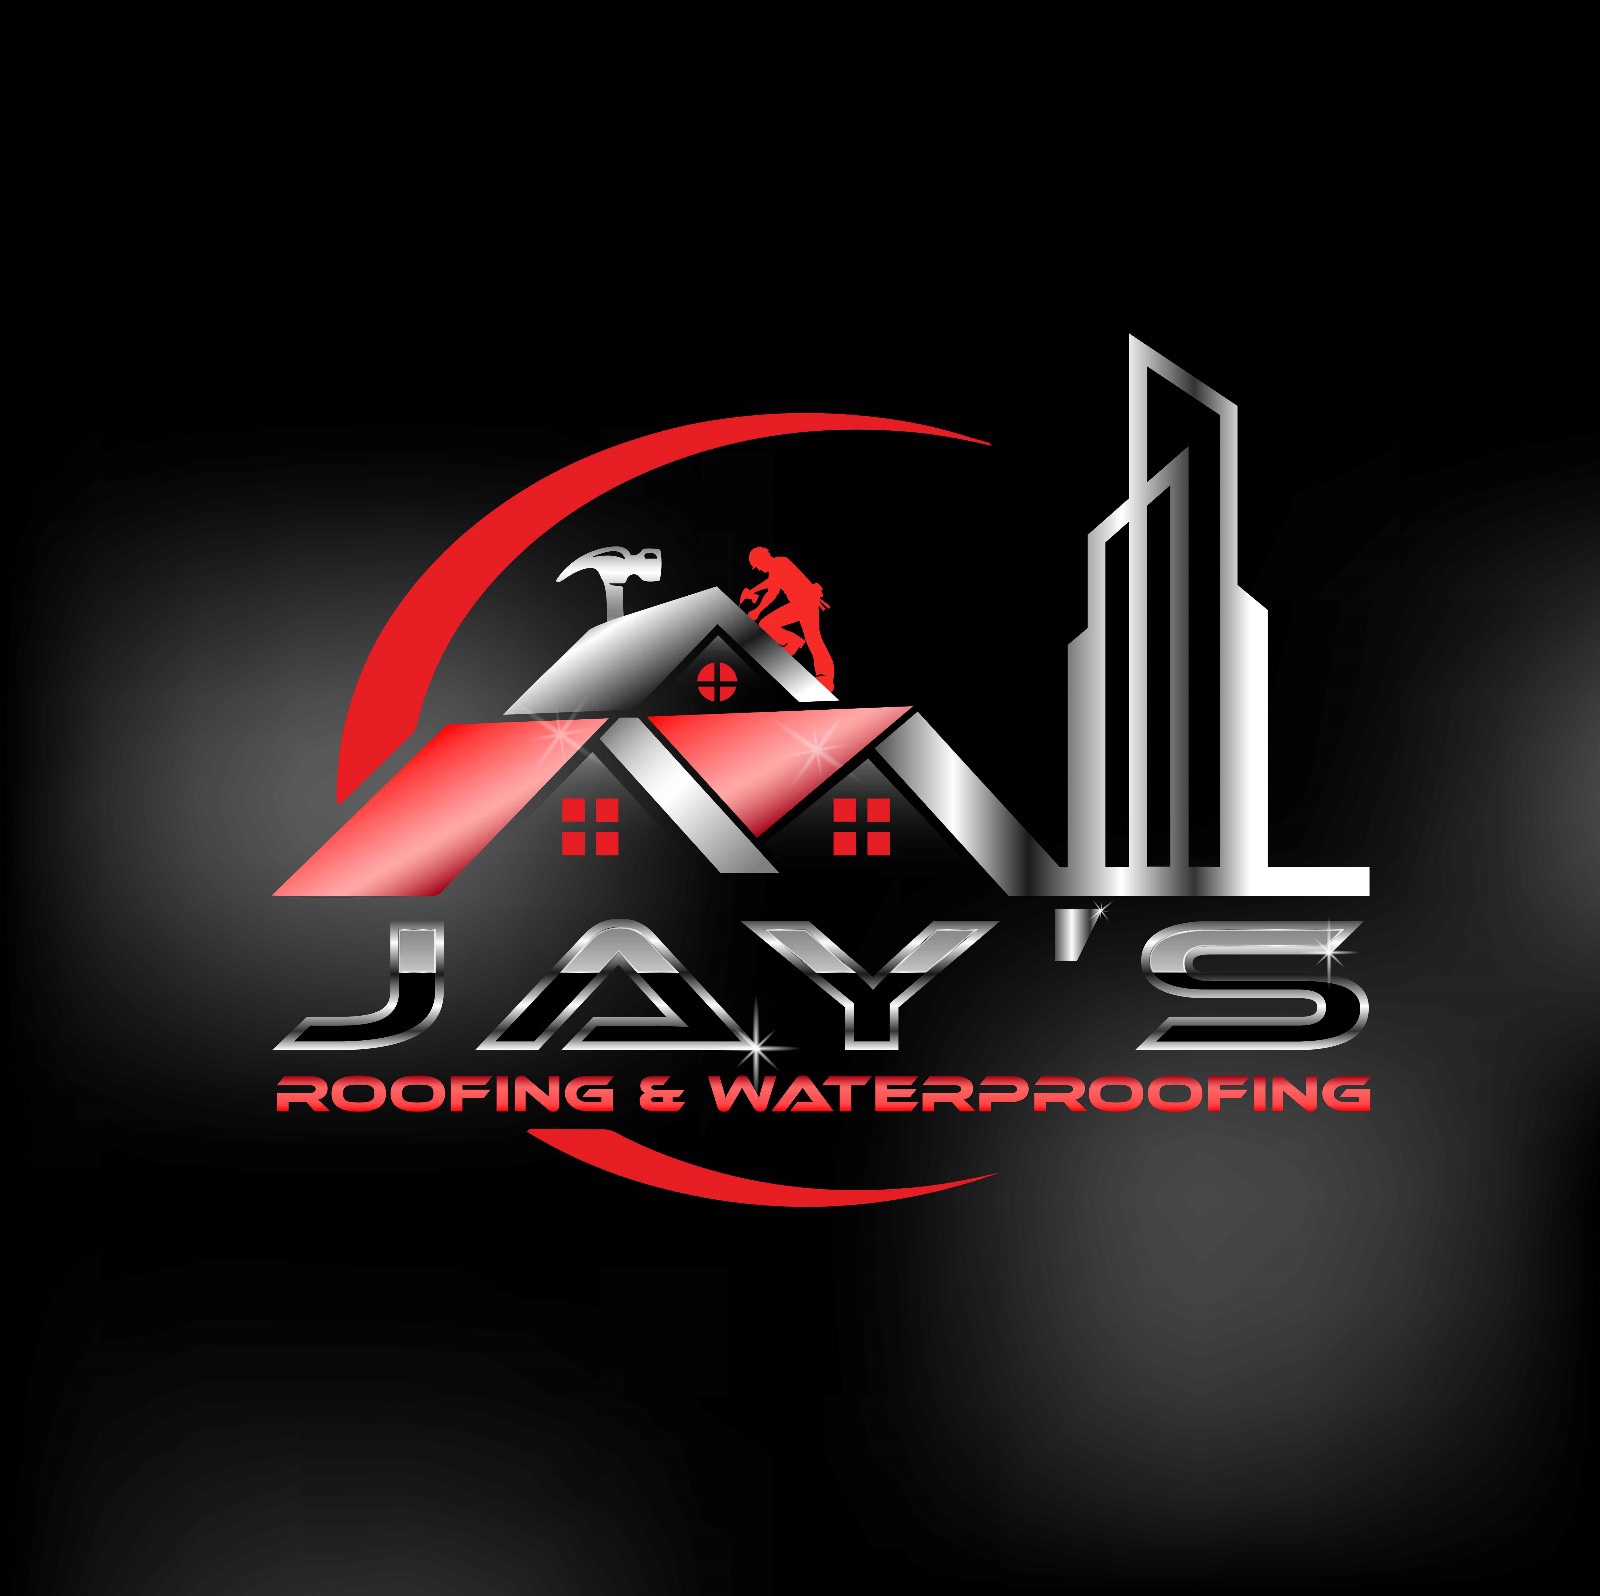 Jay’s Roofing & Waterproofing 's logo